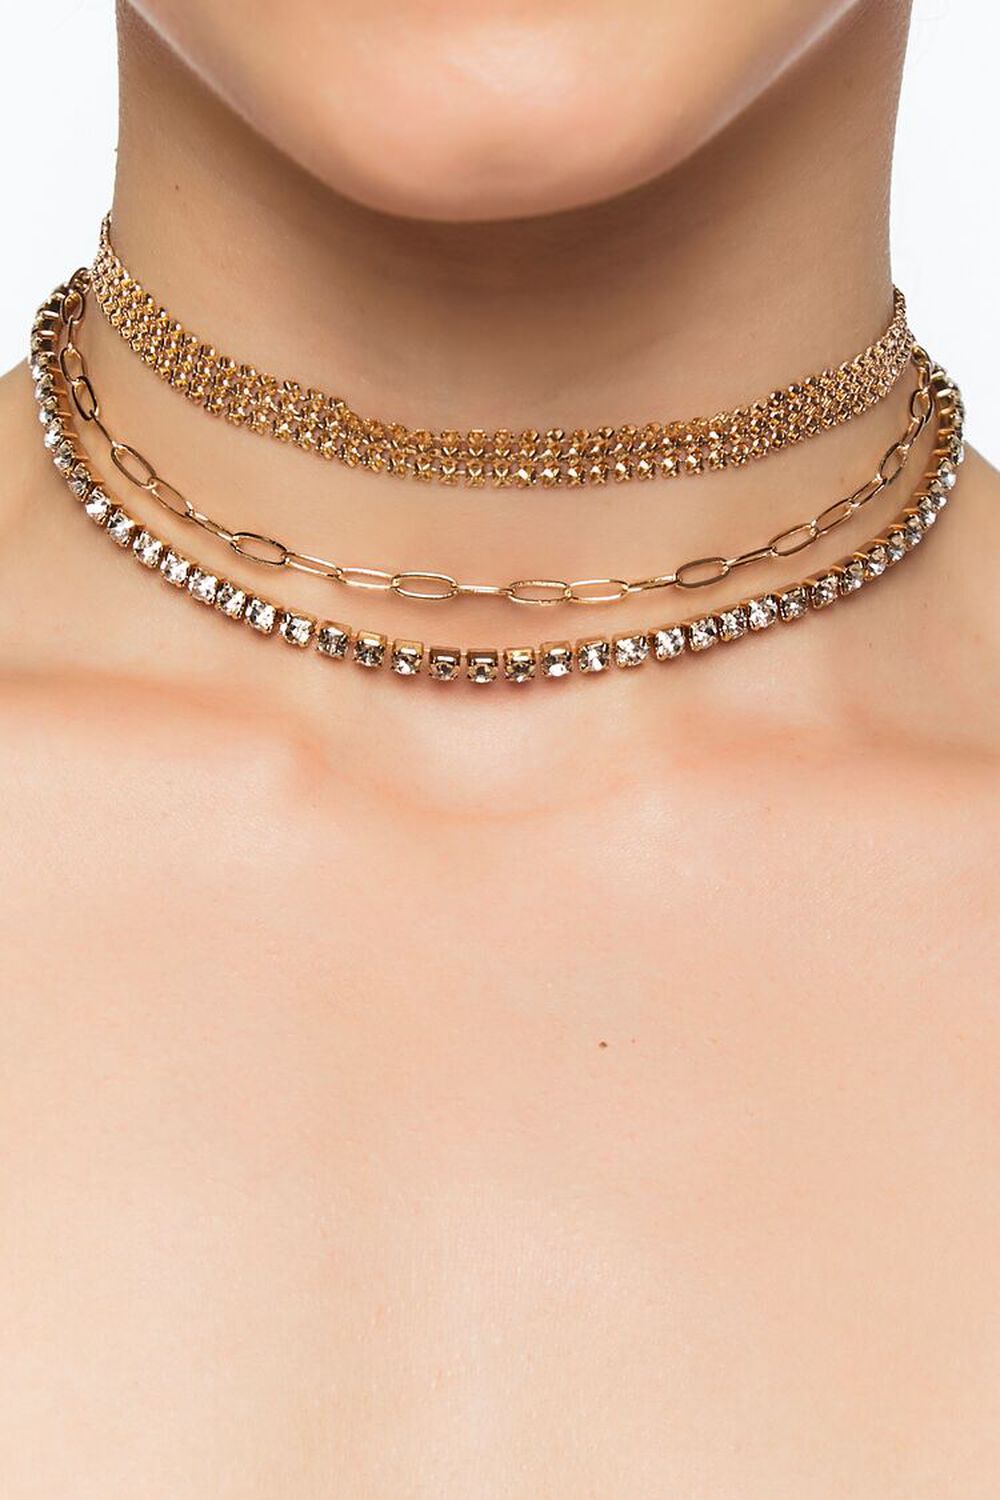 Rhinestone Chain Choker Necklace Set, image 1